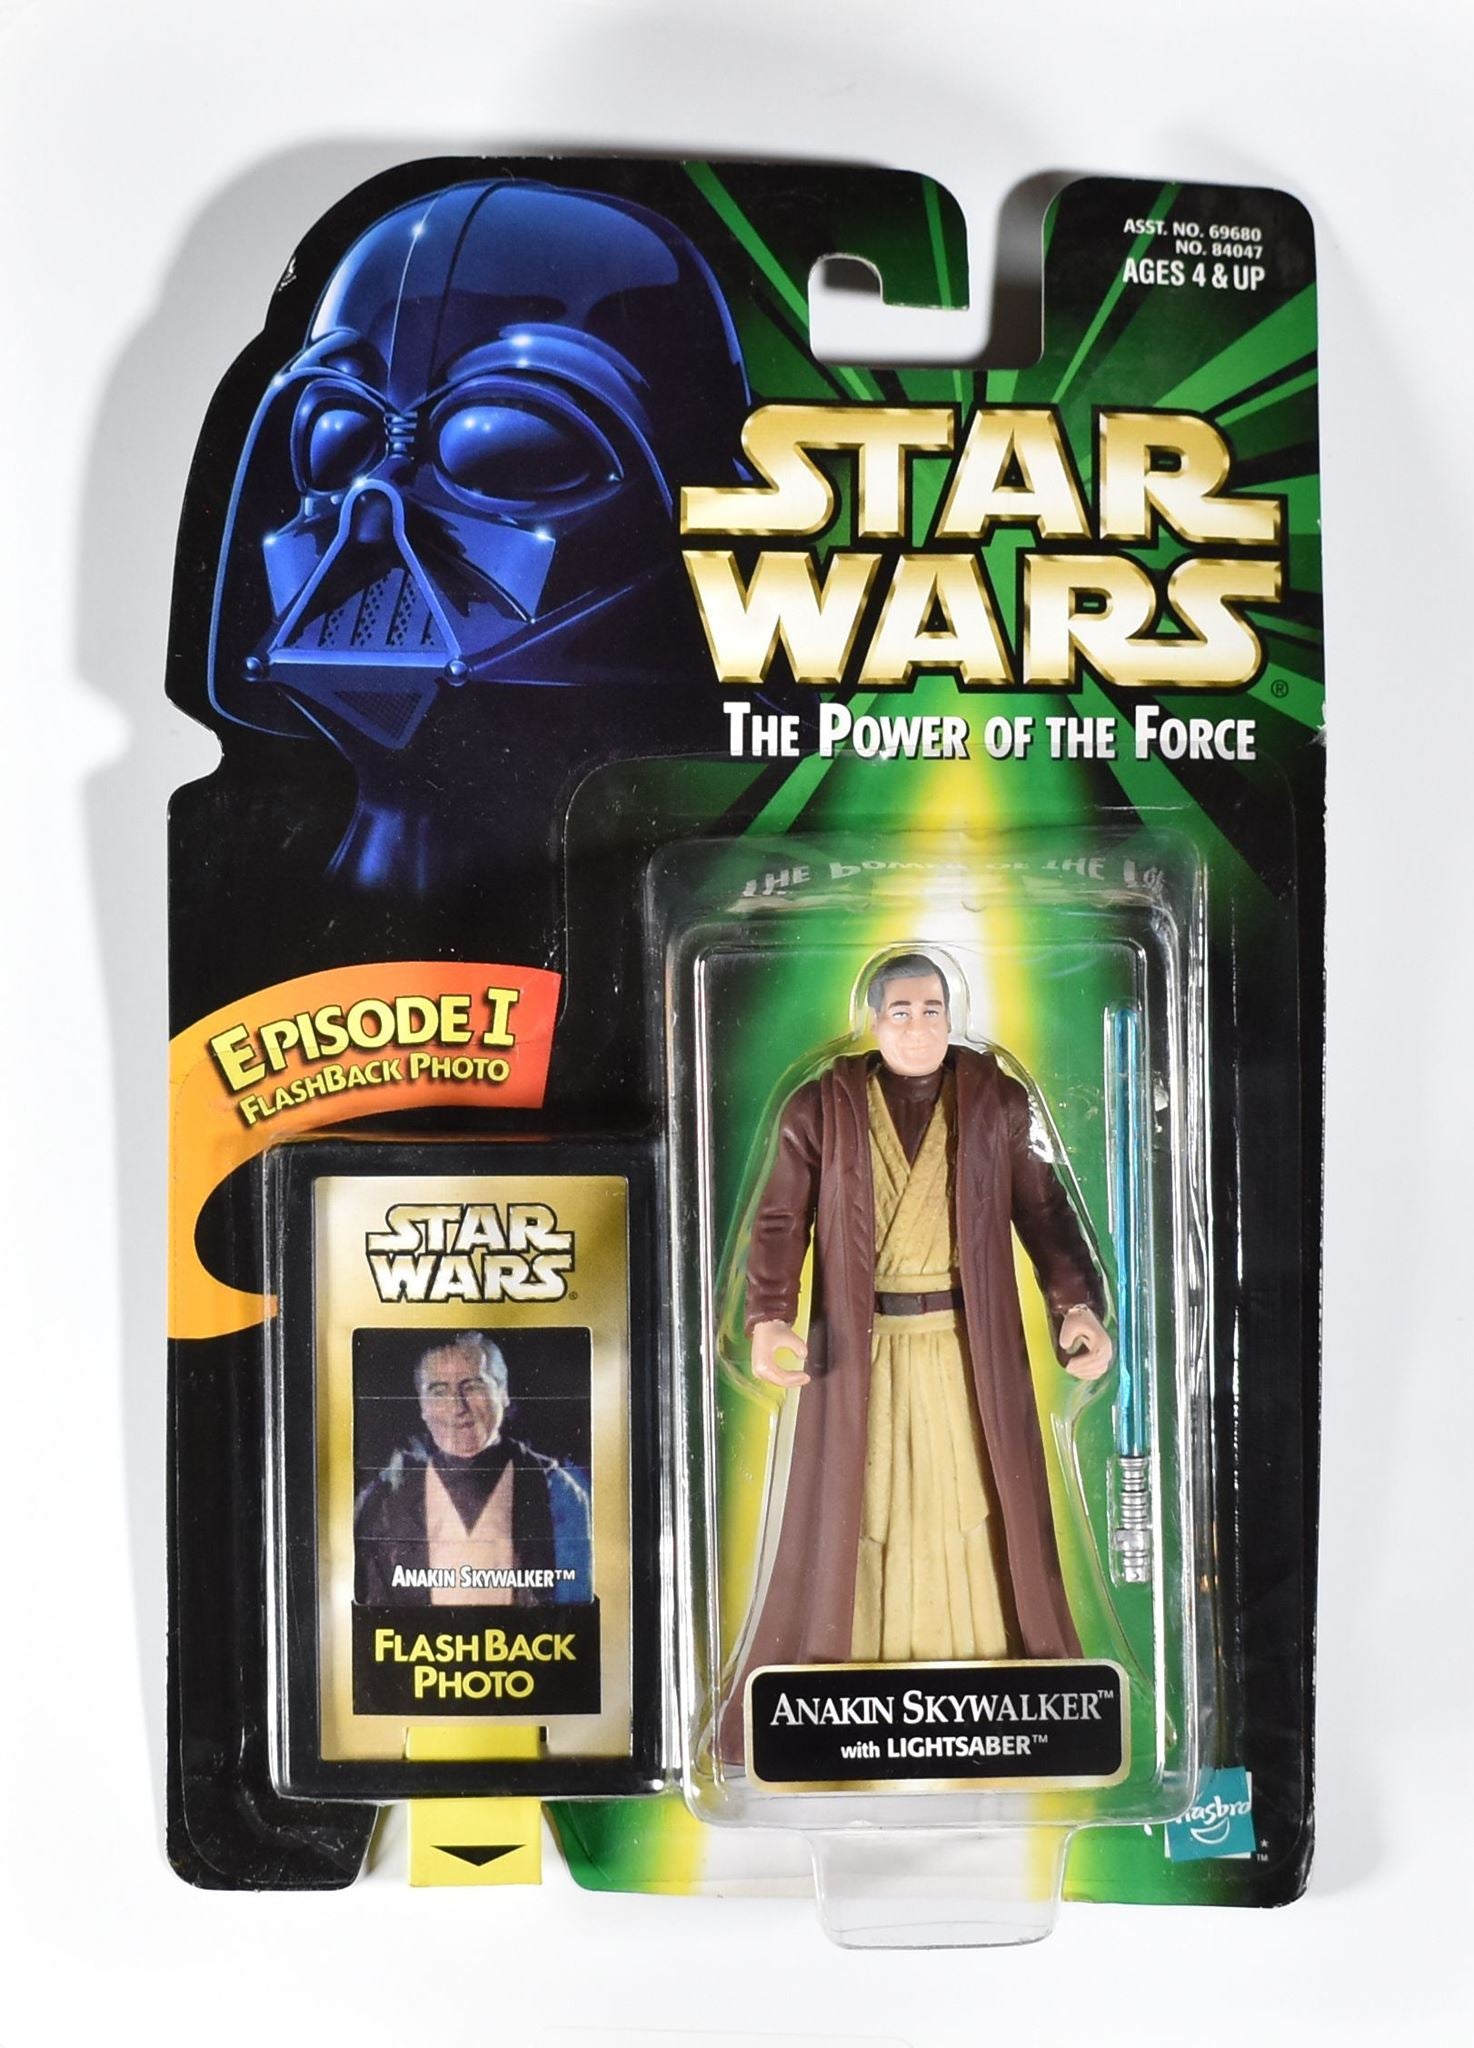 Anakin Skywalker with Lightsaber Asst. No. 84047 Star Wars Power of the force